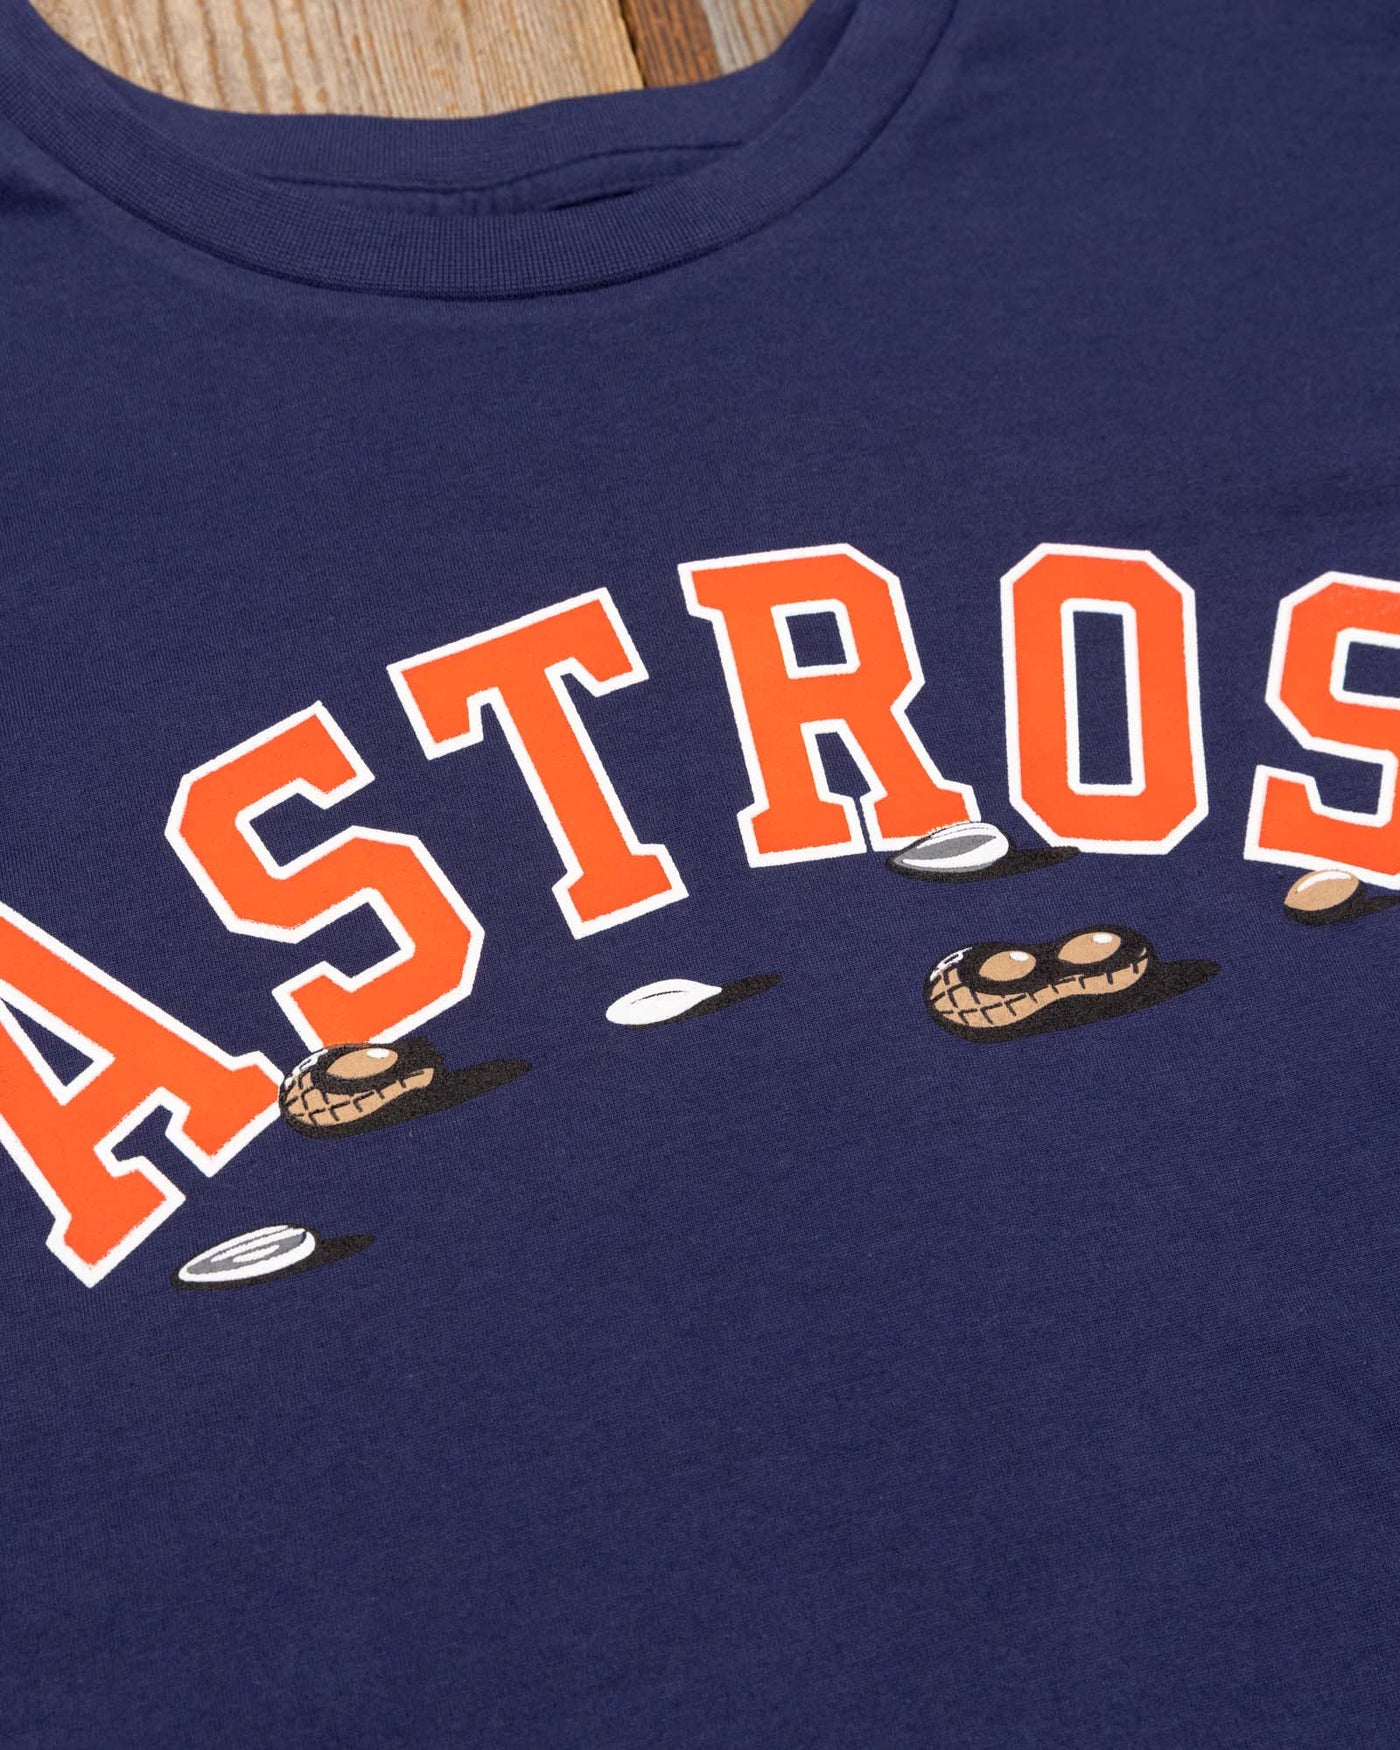 ¡Consigue tus cacahuetes! -Astros de Houston 